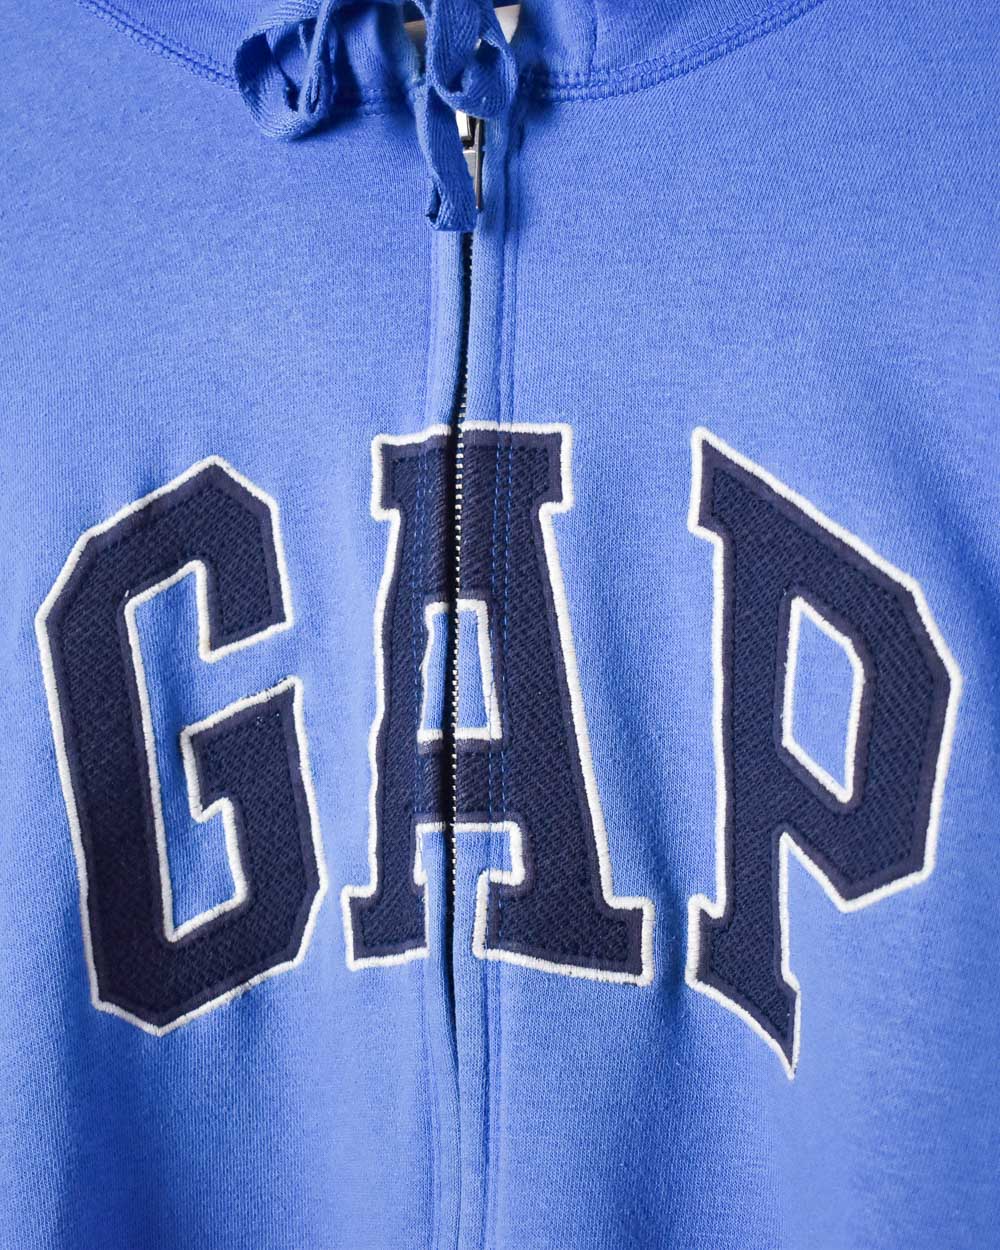 Blue Gap Zip-Through Hoodie - X-Large